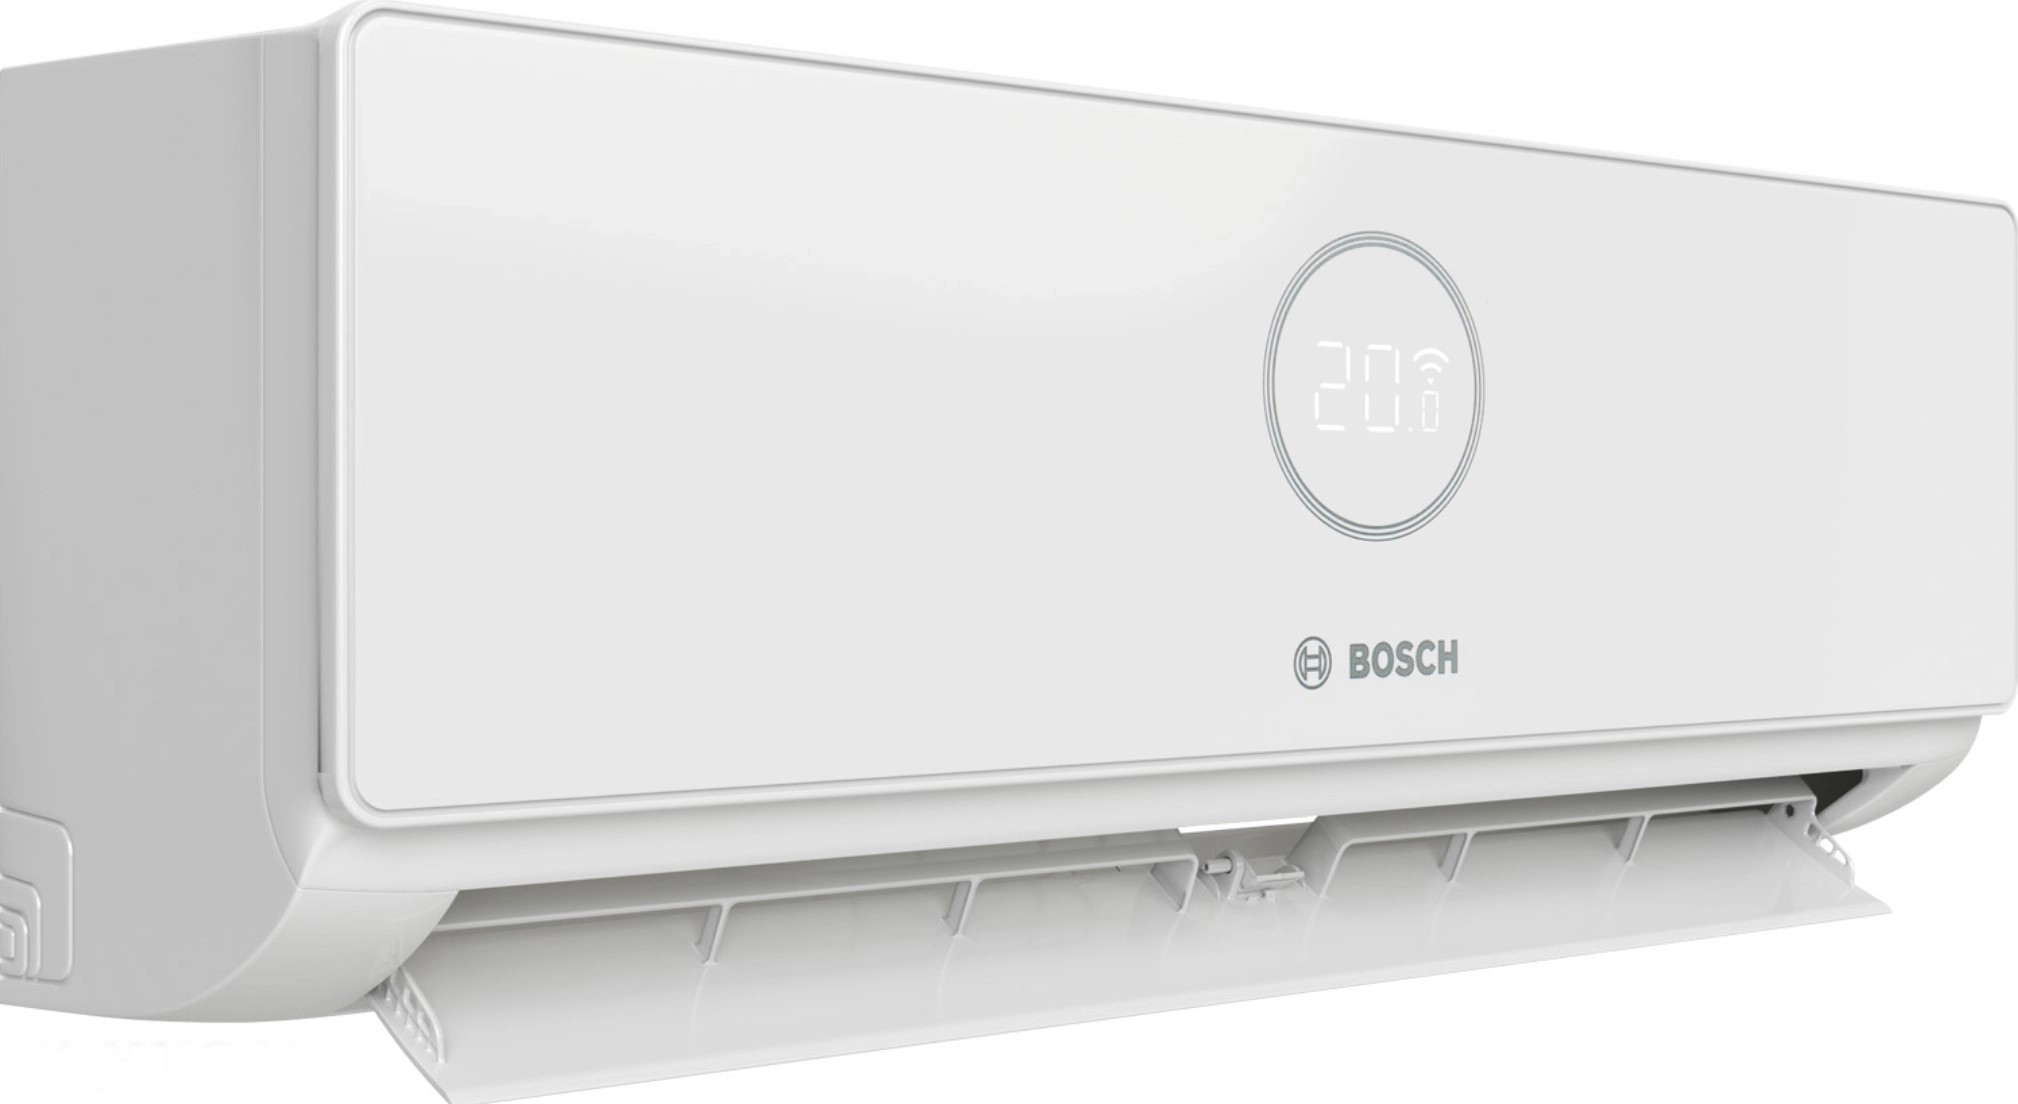 продаємо Bosch CL5000i W 35E, 3,5 кВт в Україні - фото 4